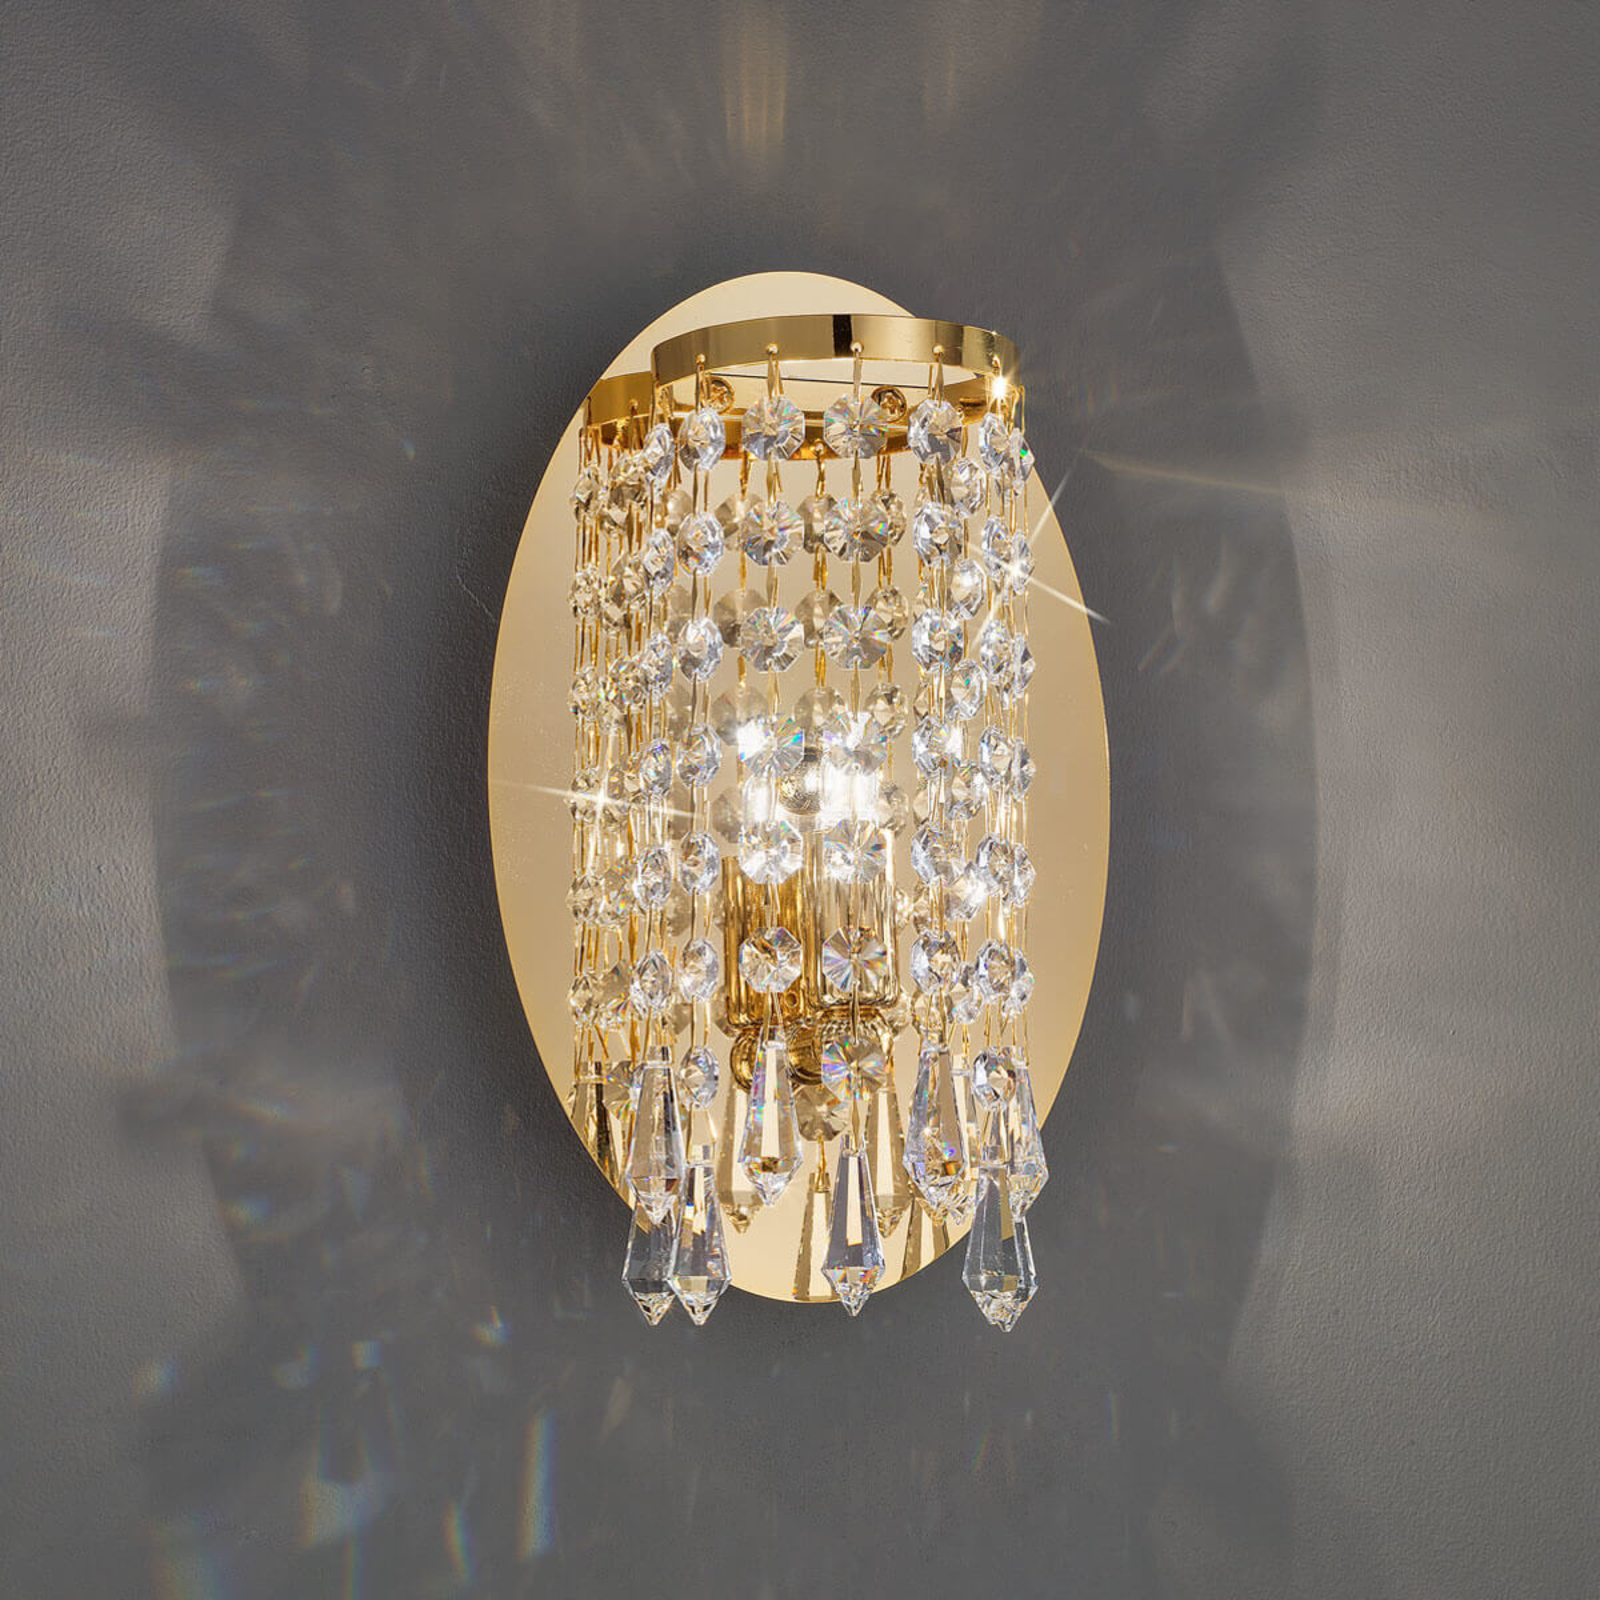 KOLARZ Charleston - crystal wall light, 24 cm